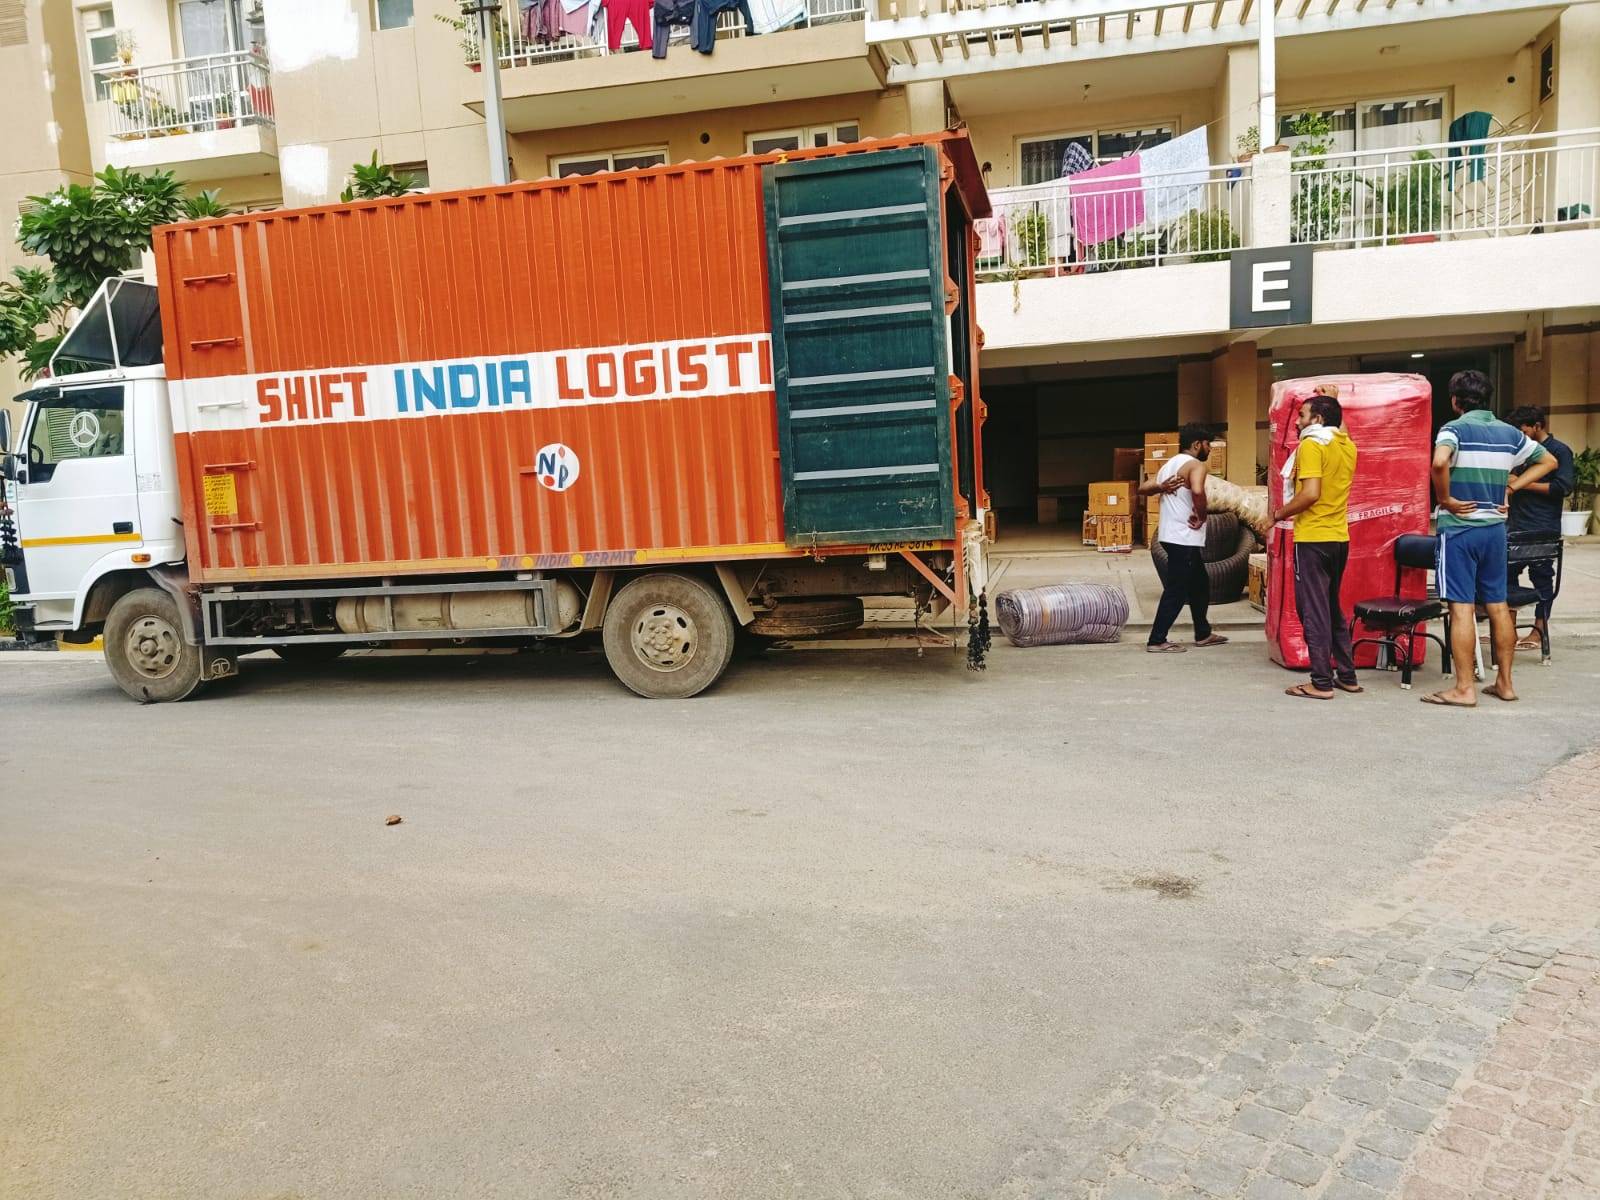 Shift India Logistic